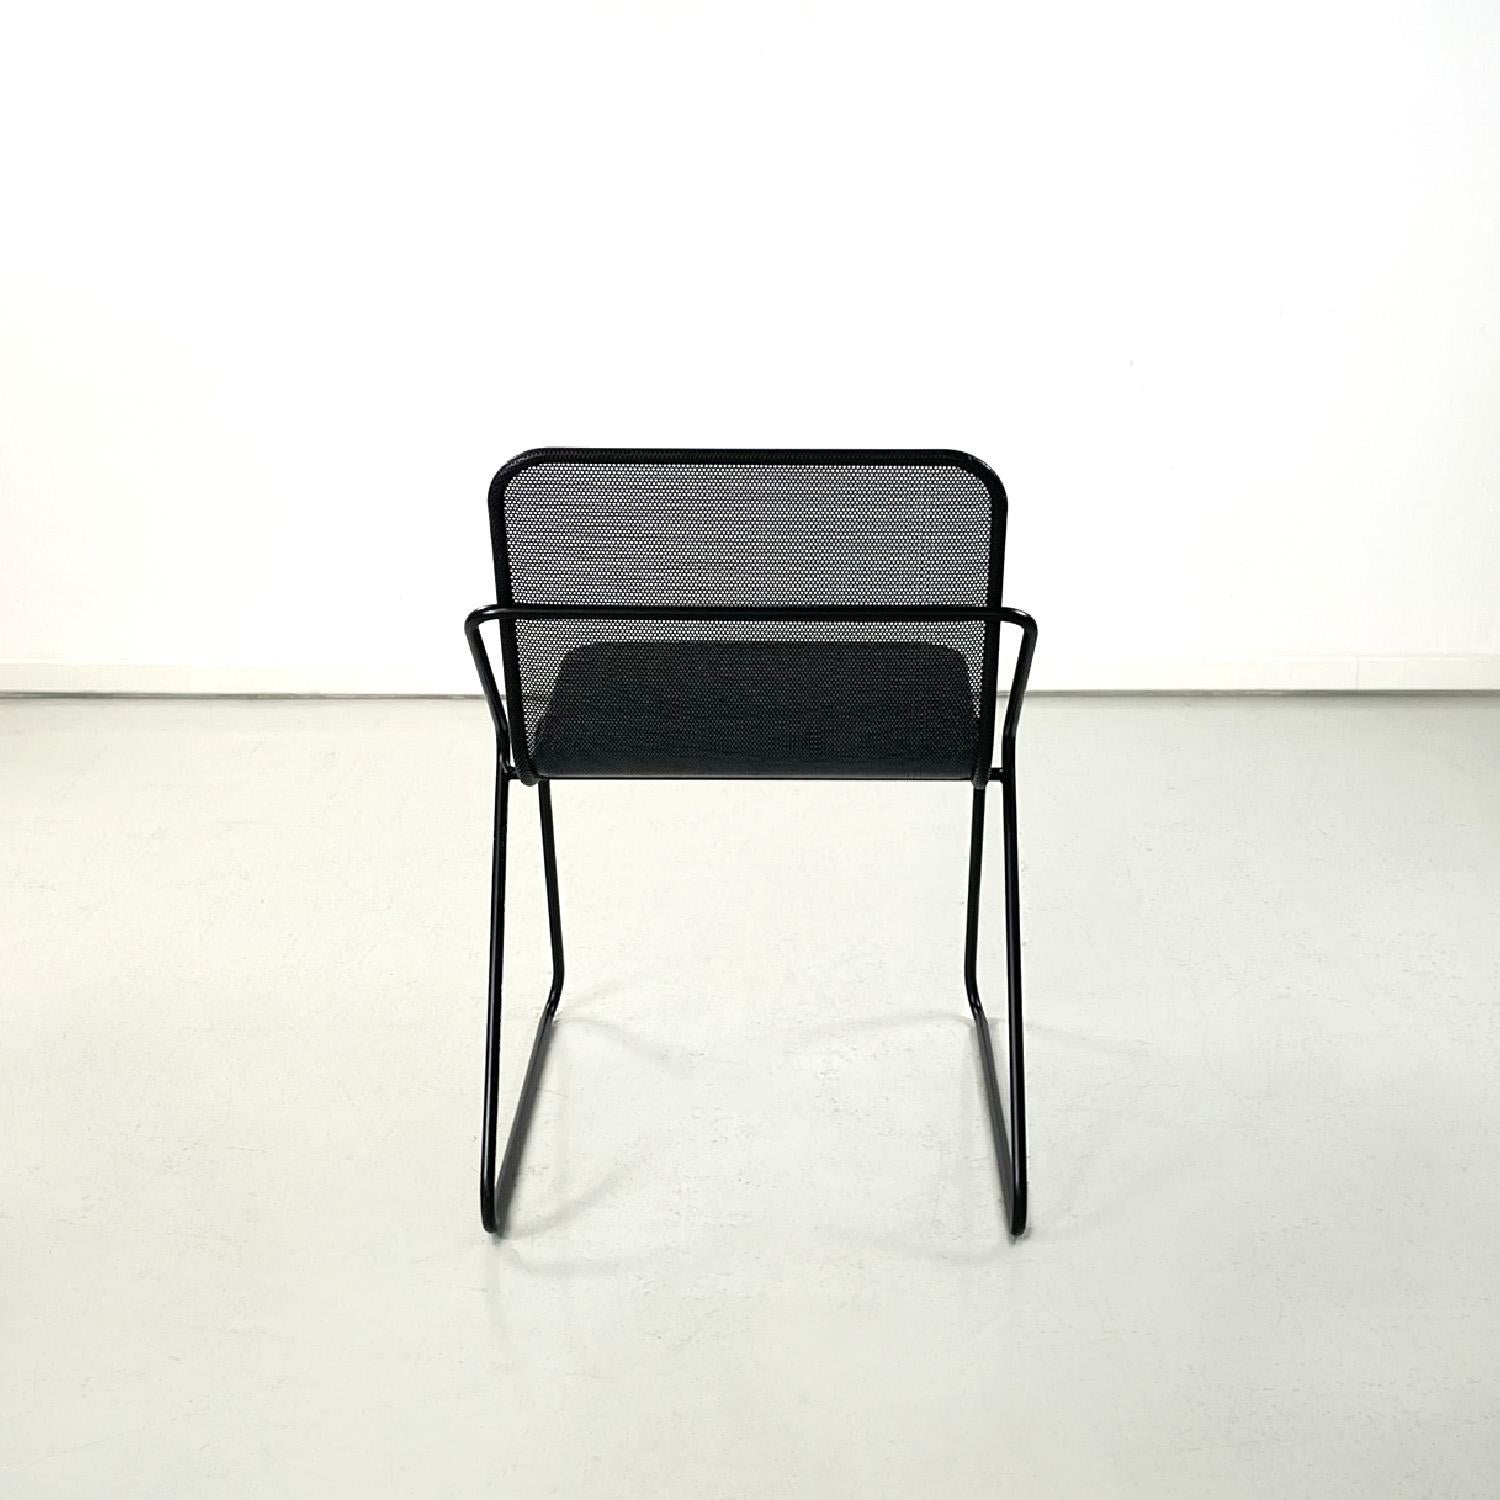 Late 20th Century Italian modern metal rod and perforated metal sheet black metal chair, 1980s